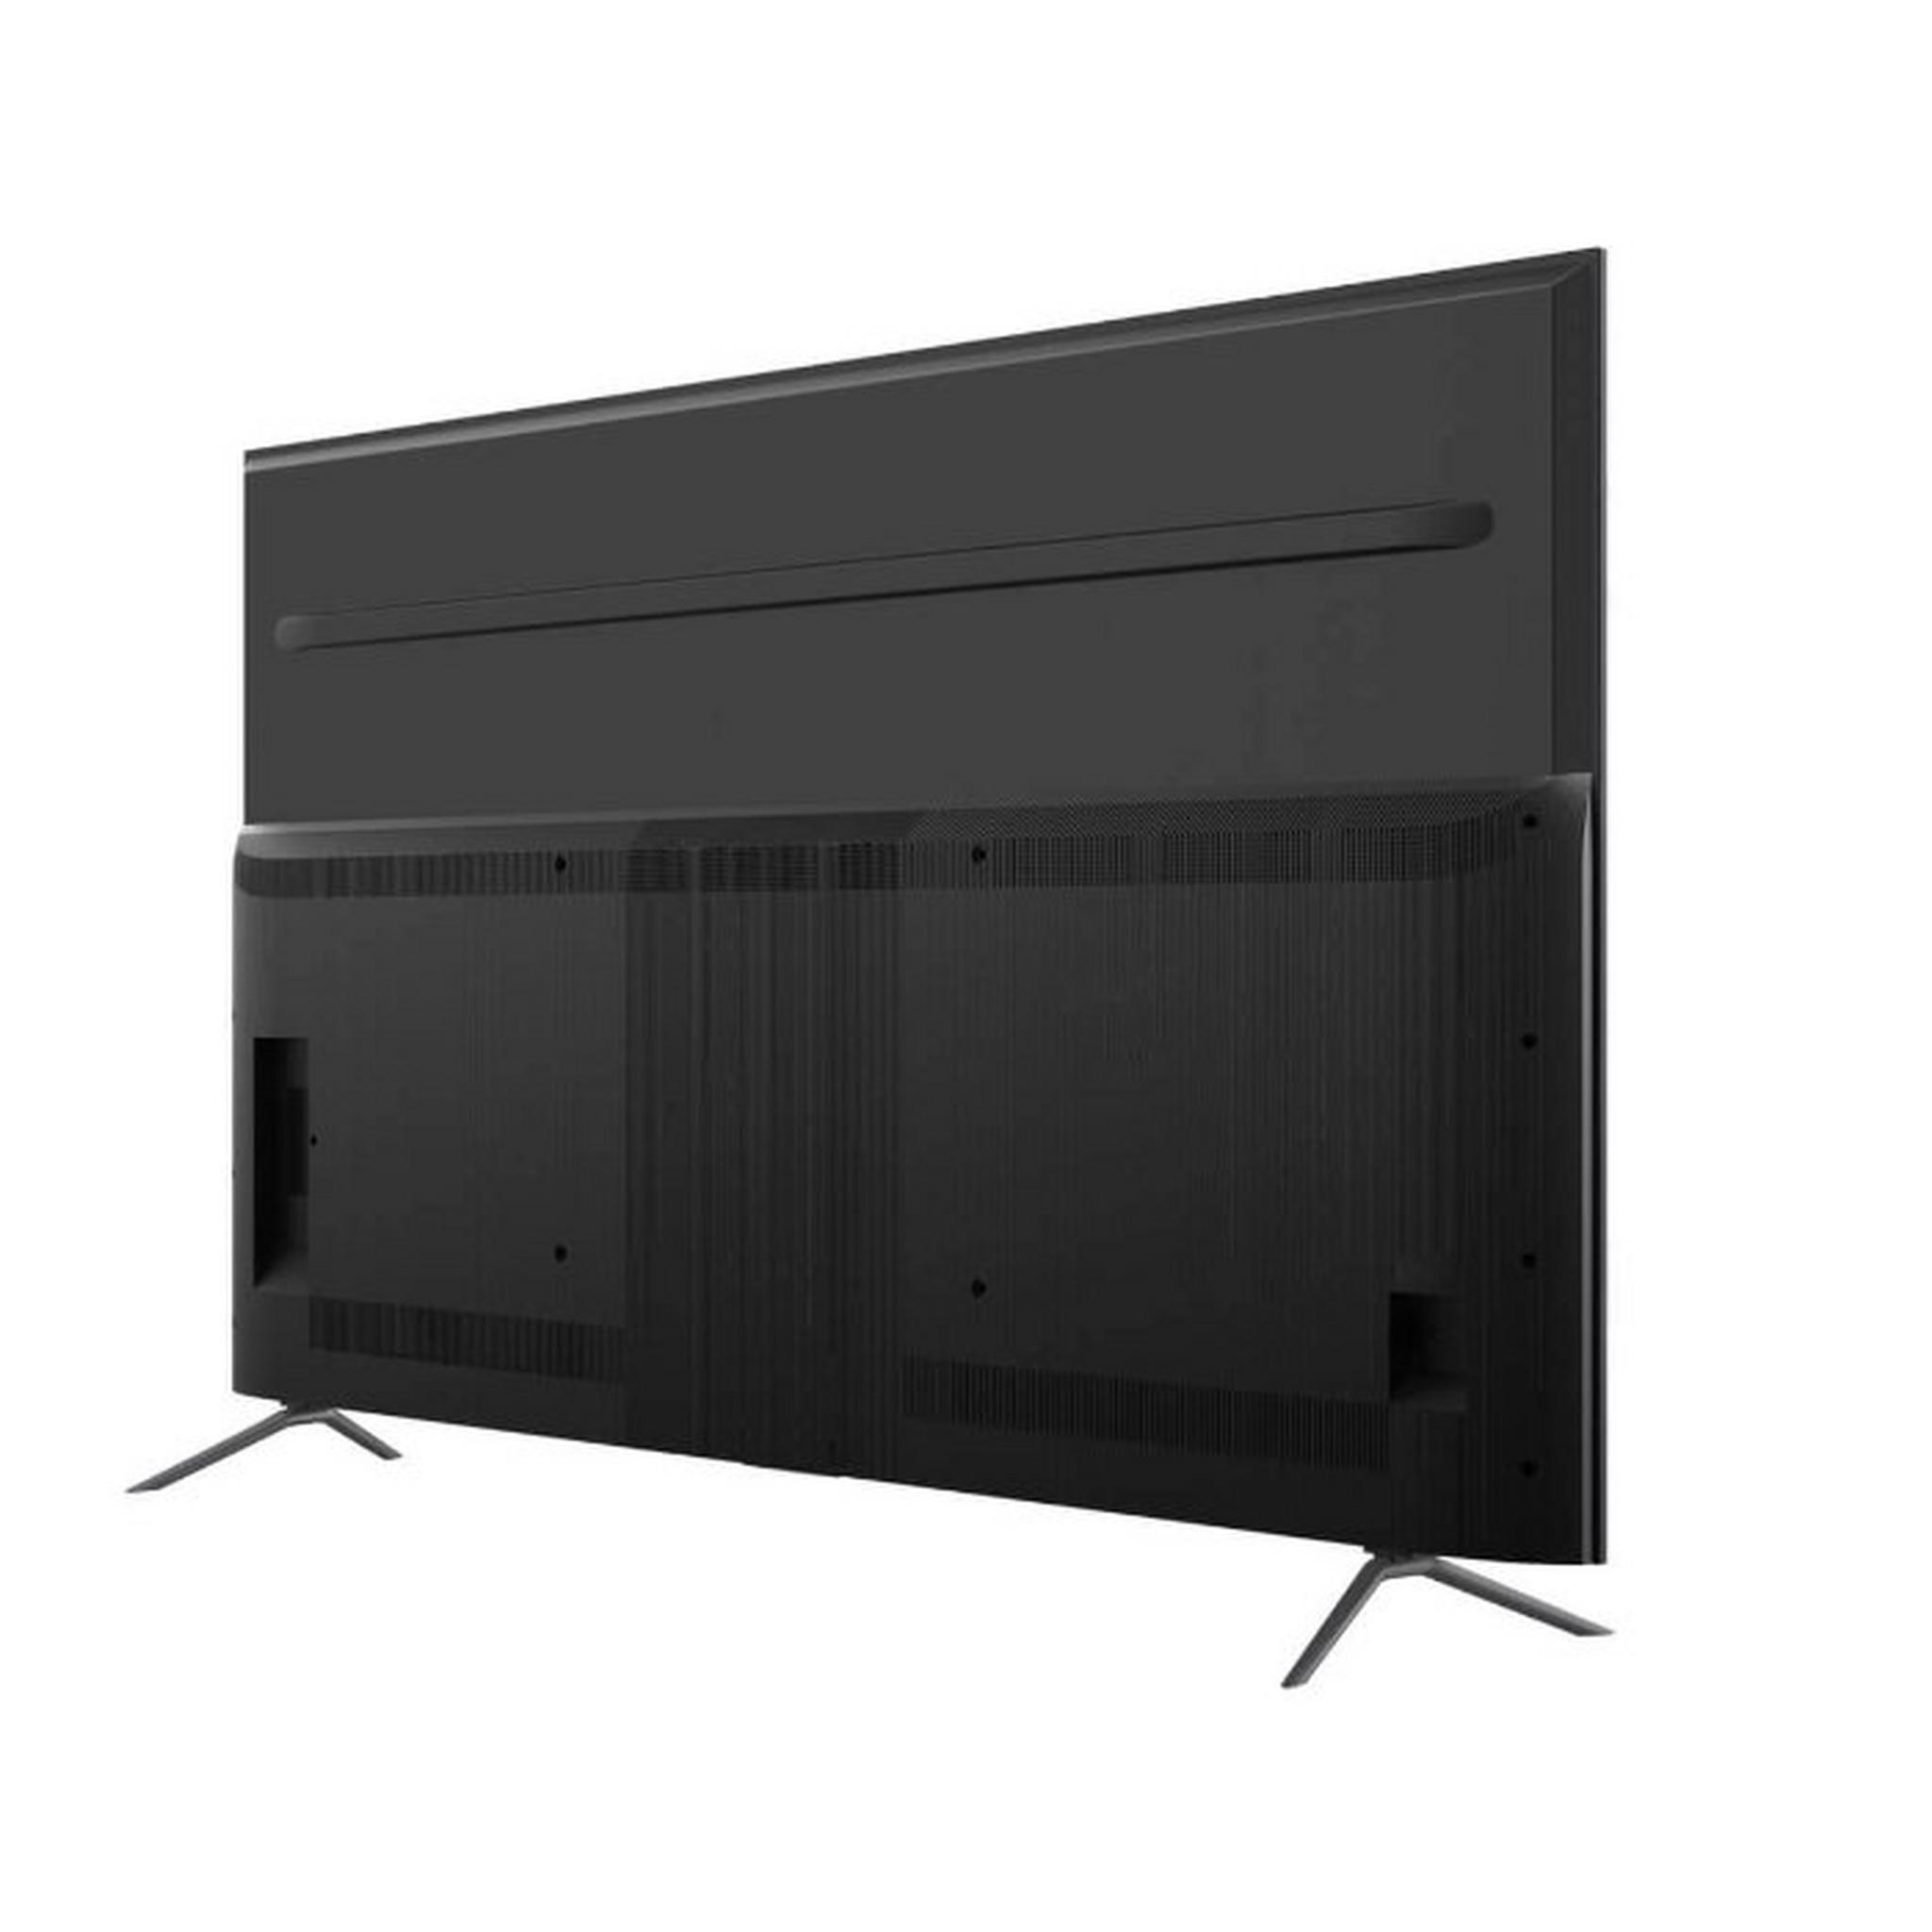 TCL 50-inch 4K UHD QLED Smart Google TV, 60 HZ, 50C645 – Black